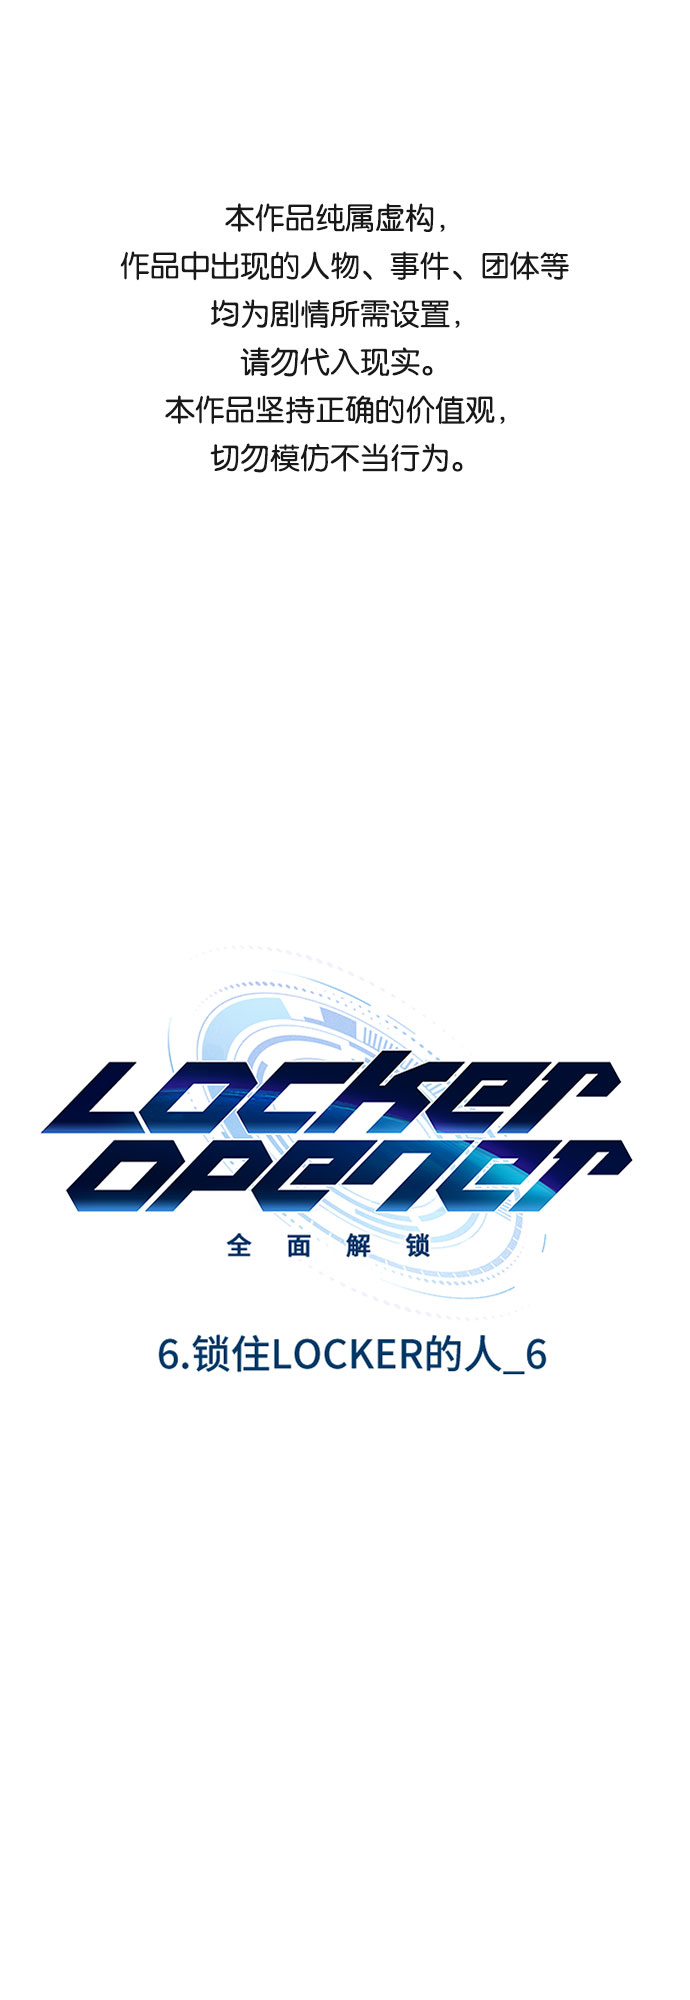 LOCKER OPENER 全面解锁 - [第80话] 锁住LOCKER的人_6(1/2) - 1